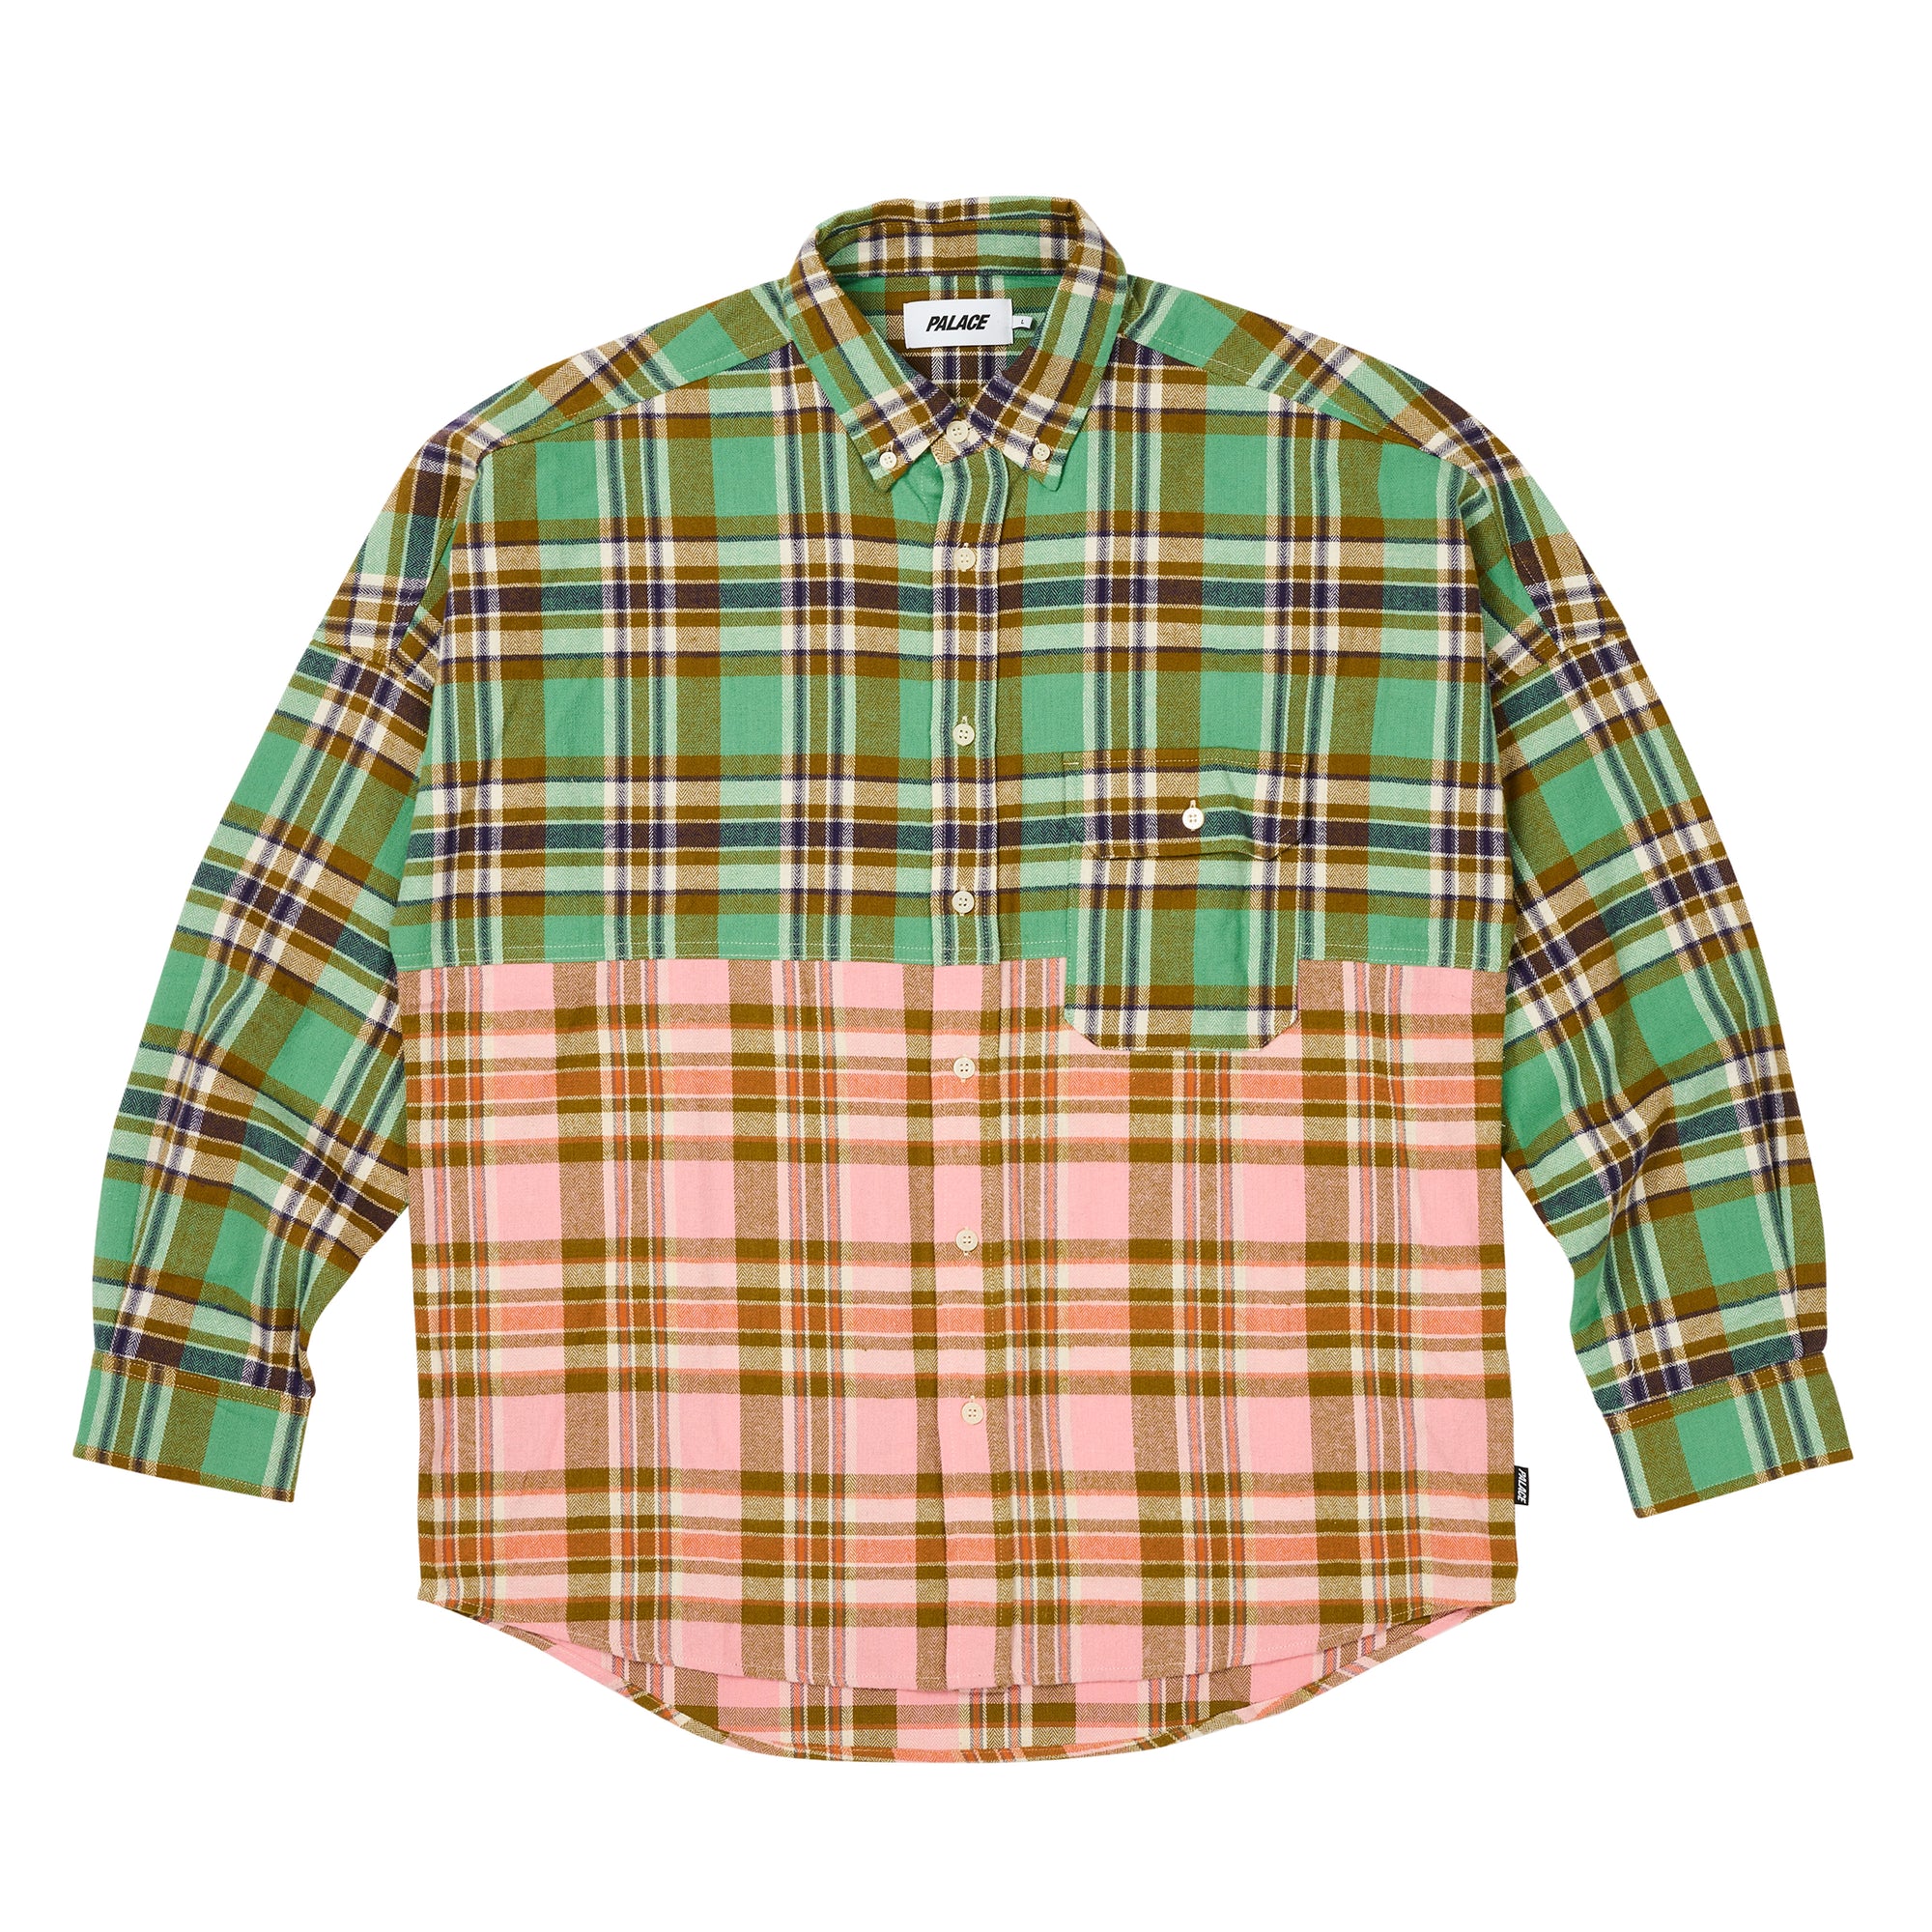 Palace - Checkmate Drop Shoulder Shirt - (Green) view 1